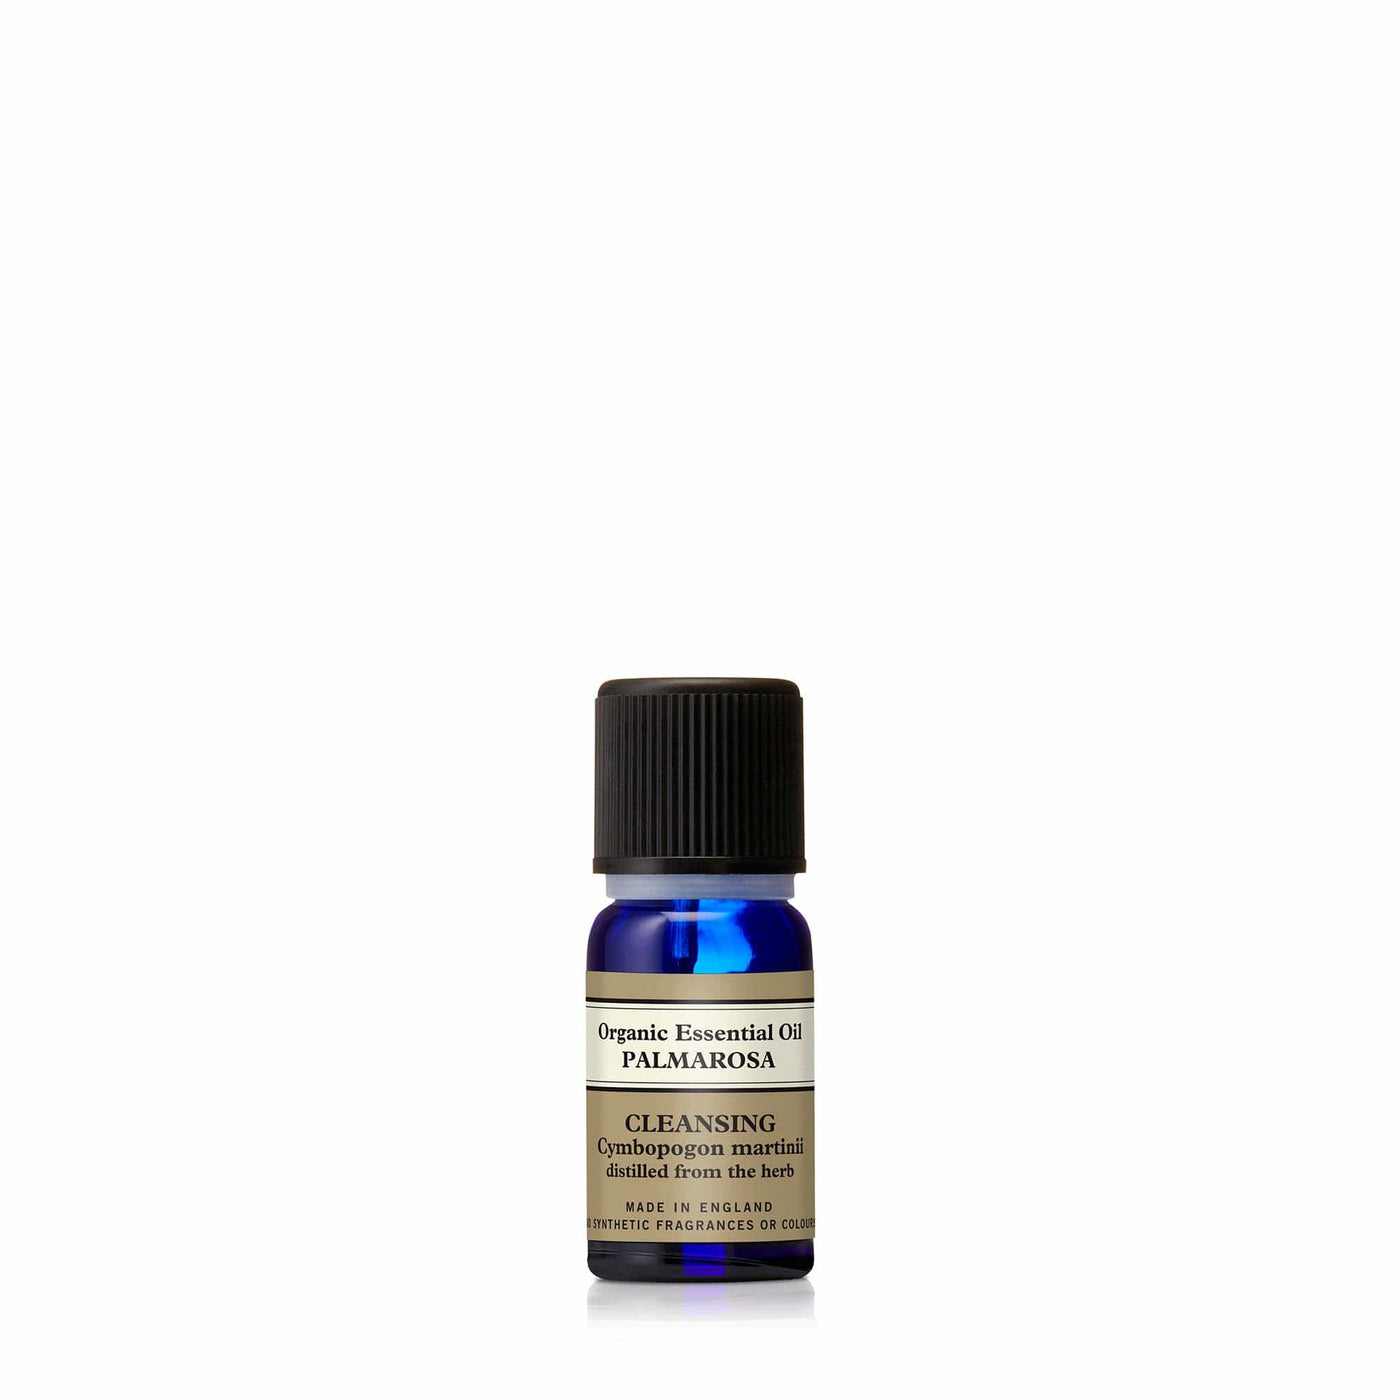 Neal's Yard Remedies Aromatherapy Palmarosa Organic Essential Oil 0.34 fl. oz